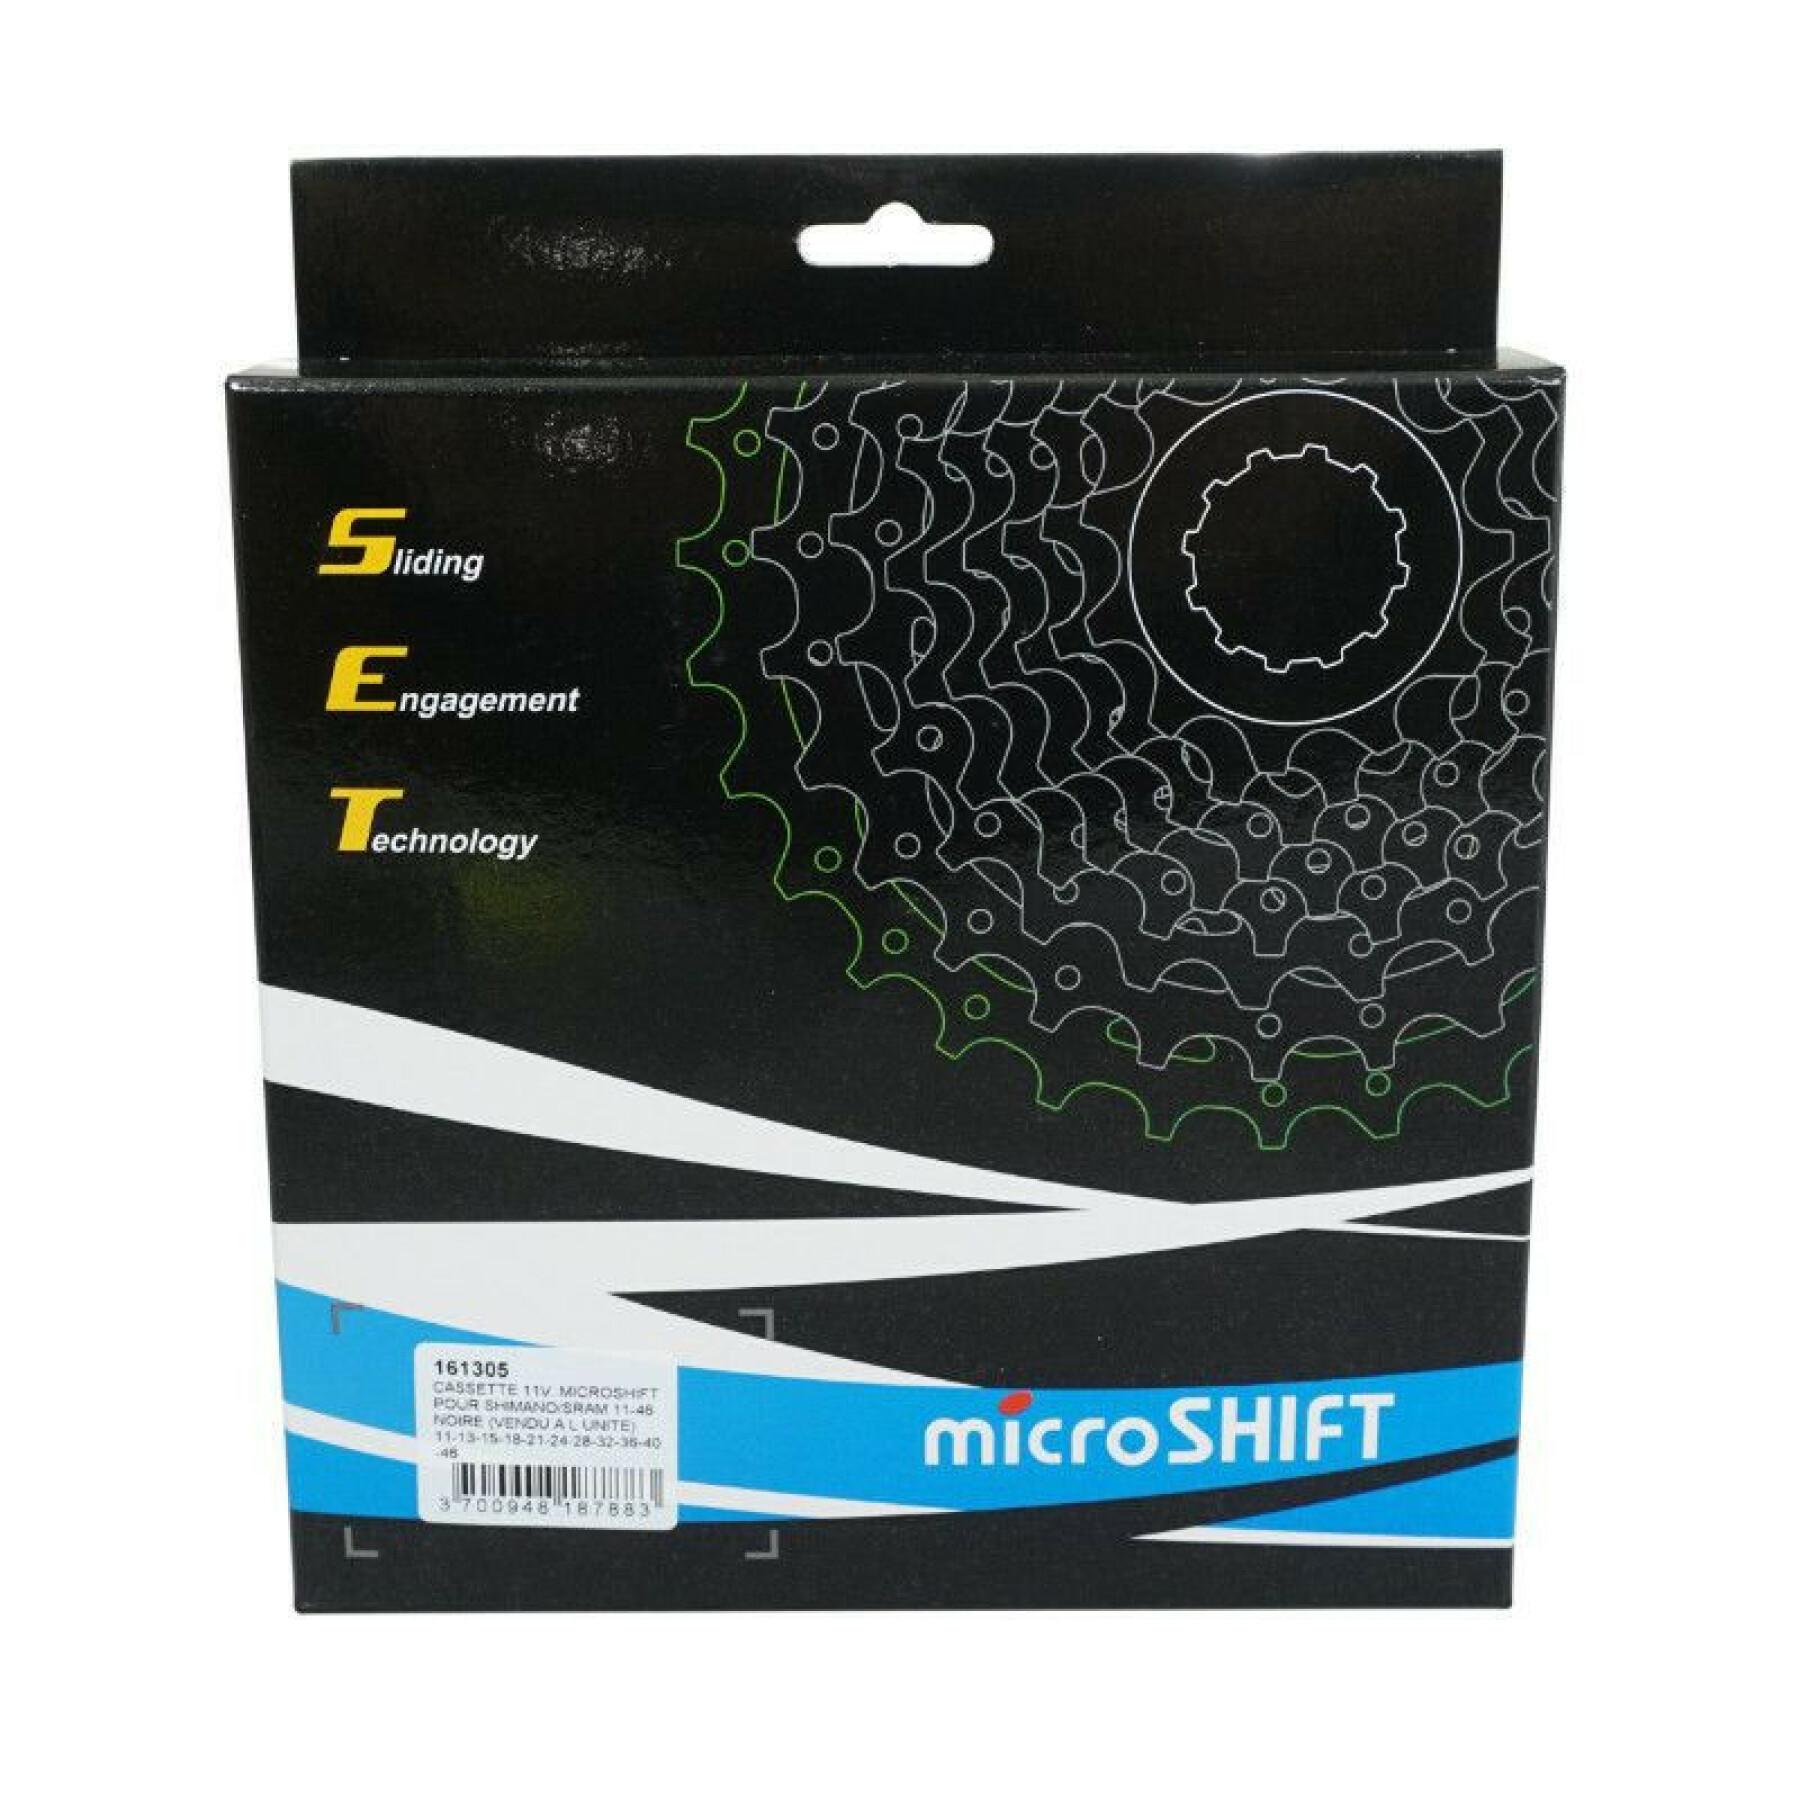 Mountain bike cassette Microshift Shimano-Sram 11 v 11-46 T